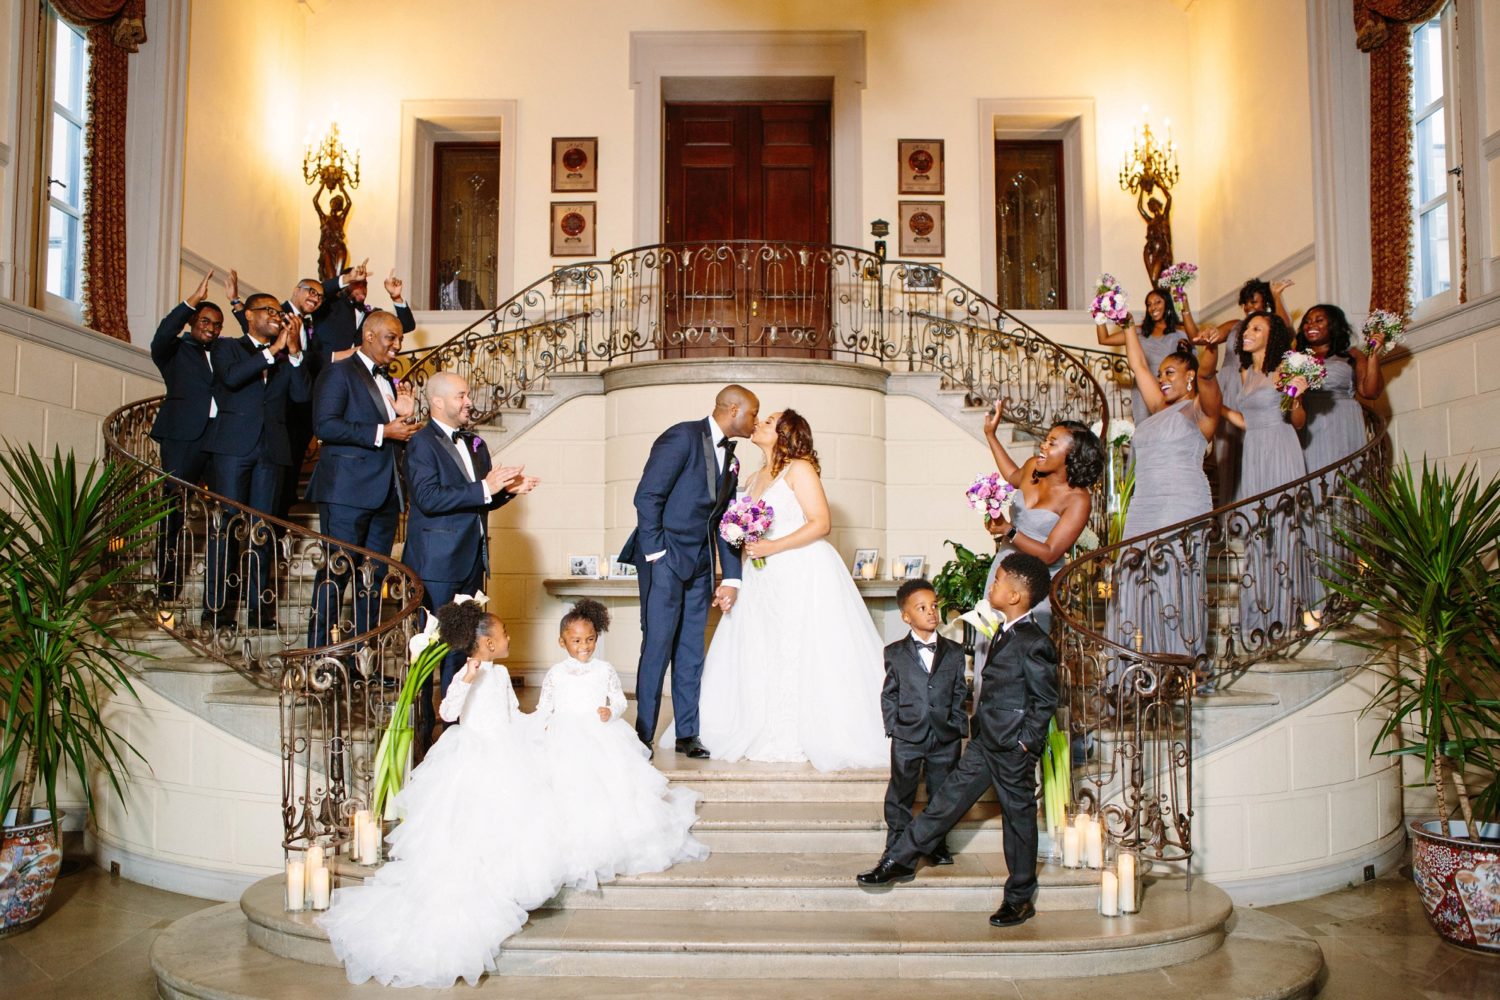 Large Bridal Party wedding photo inside the Oheka Castle in Huntington, New York | Photo by Samantha Clarke